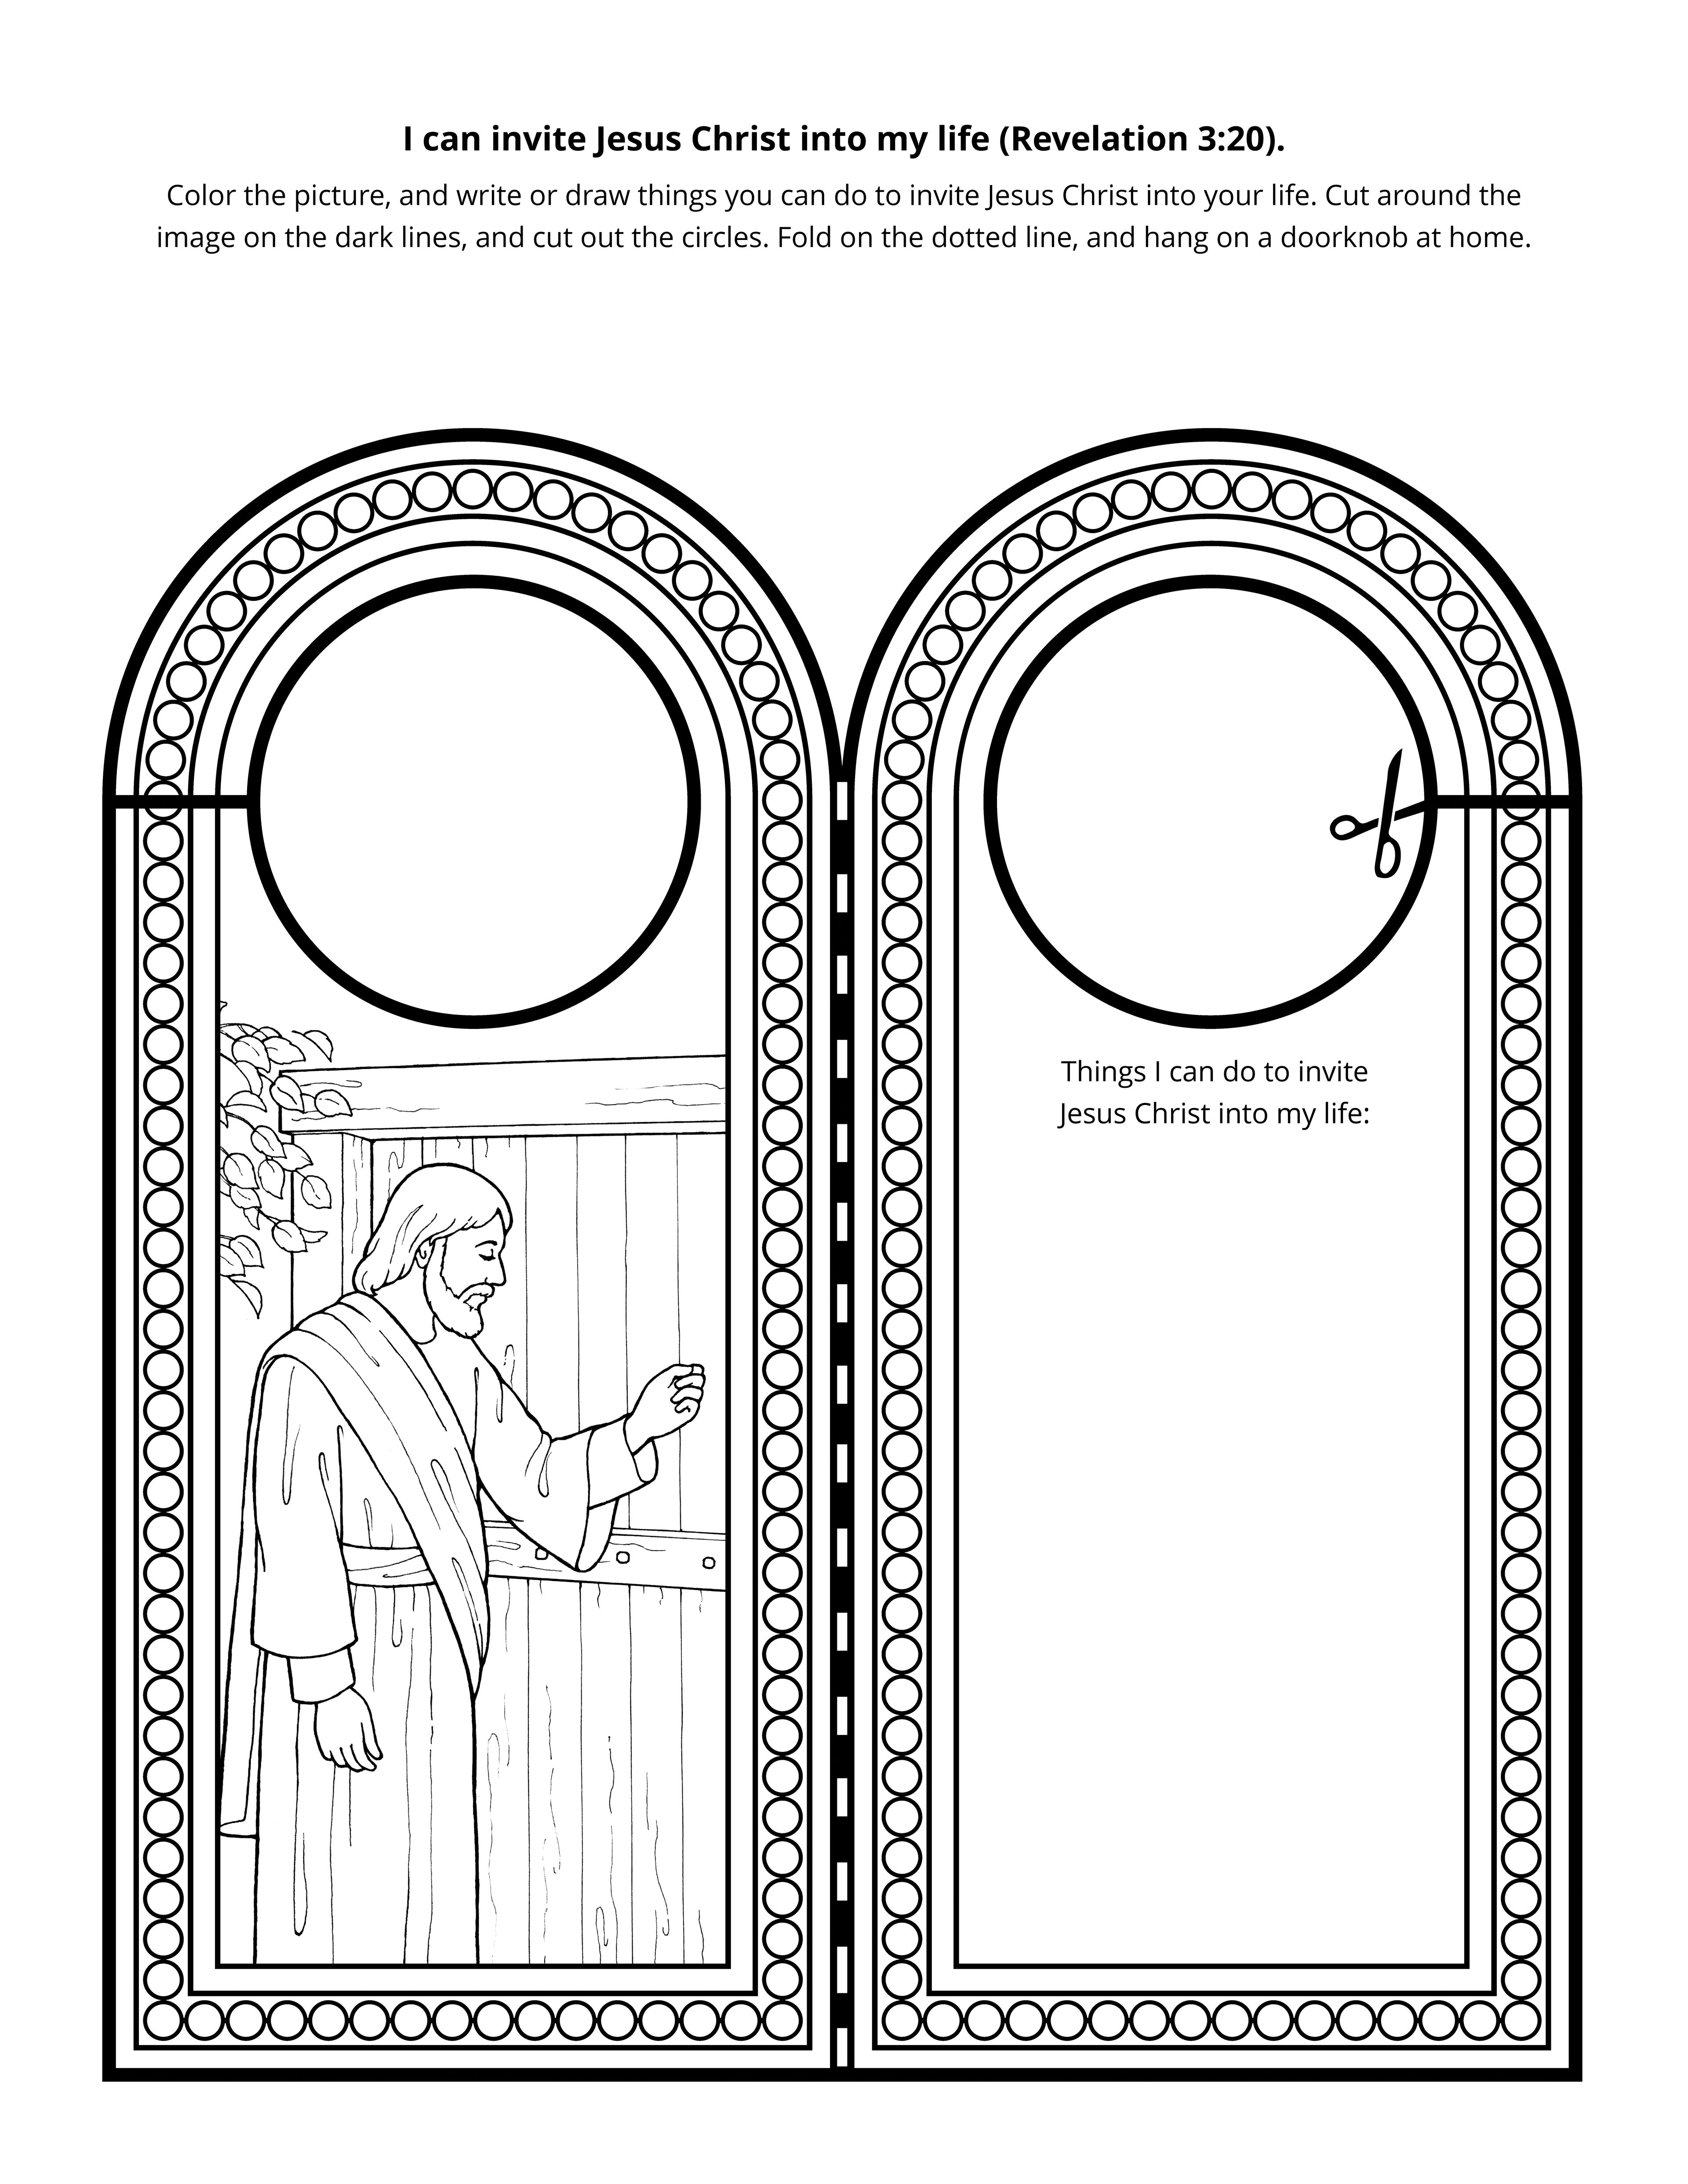 An illustration of Jesus knocking on a wooden door.